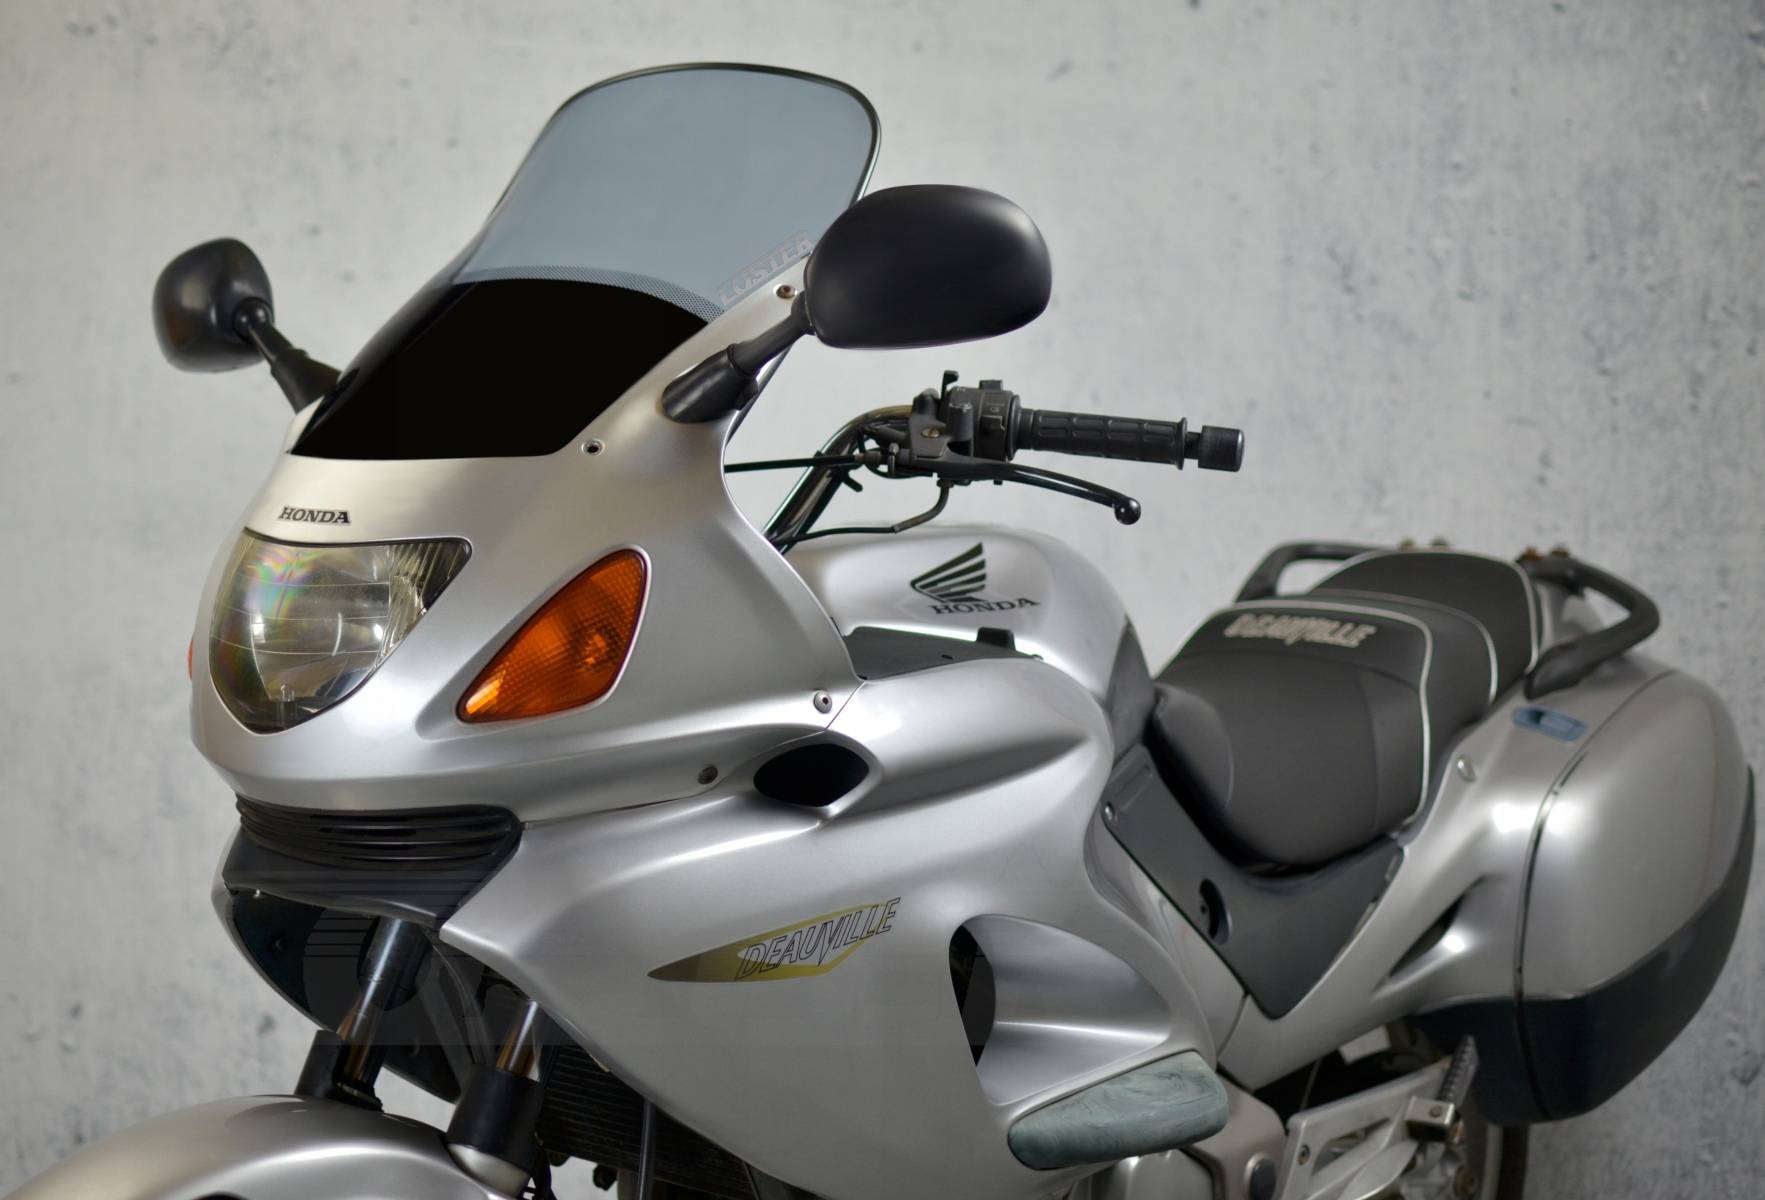 Мотоцикл хонда nt 700v deauville: технические характеристики байка